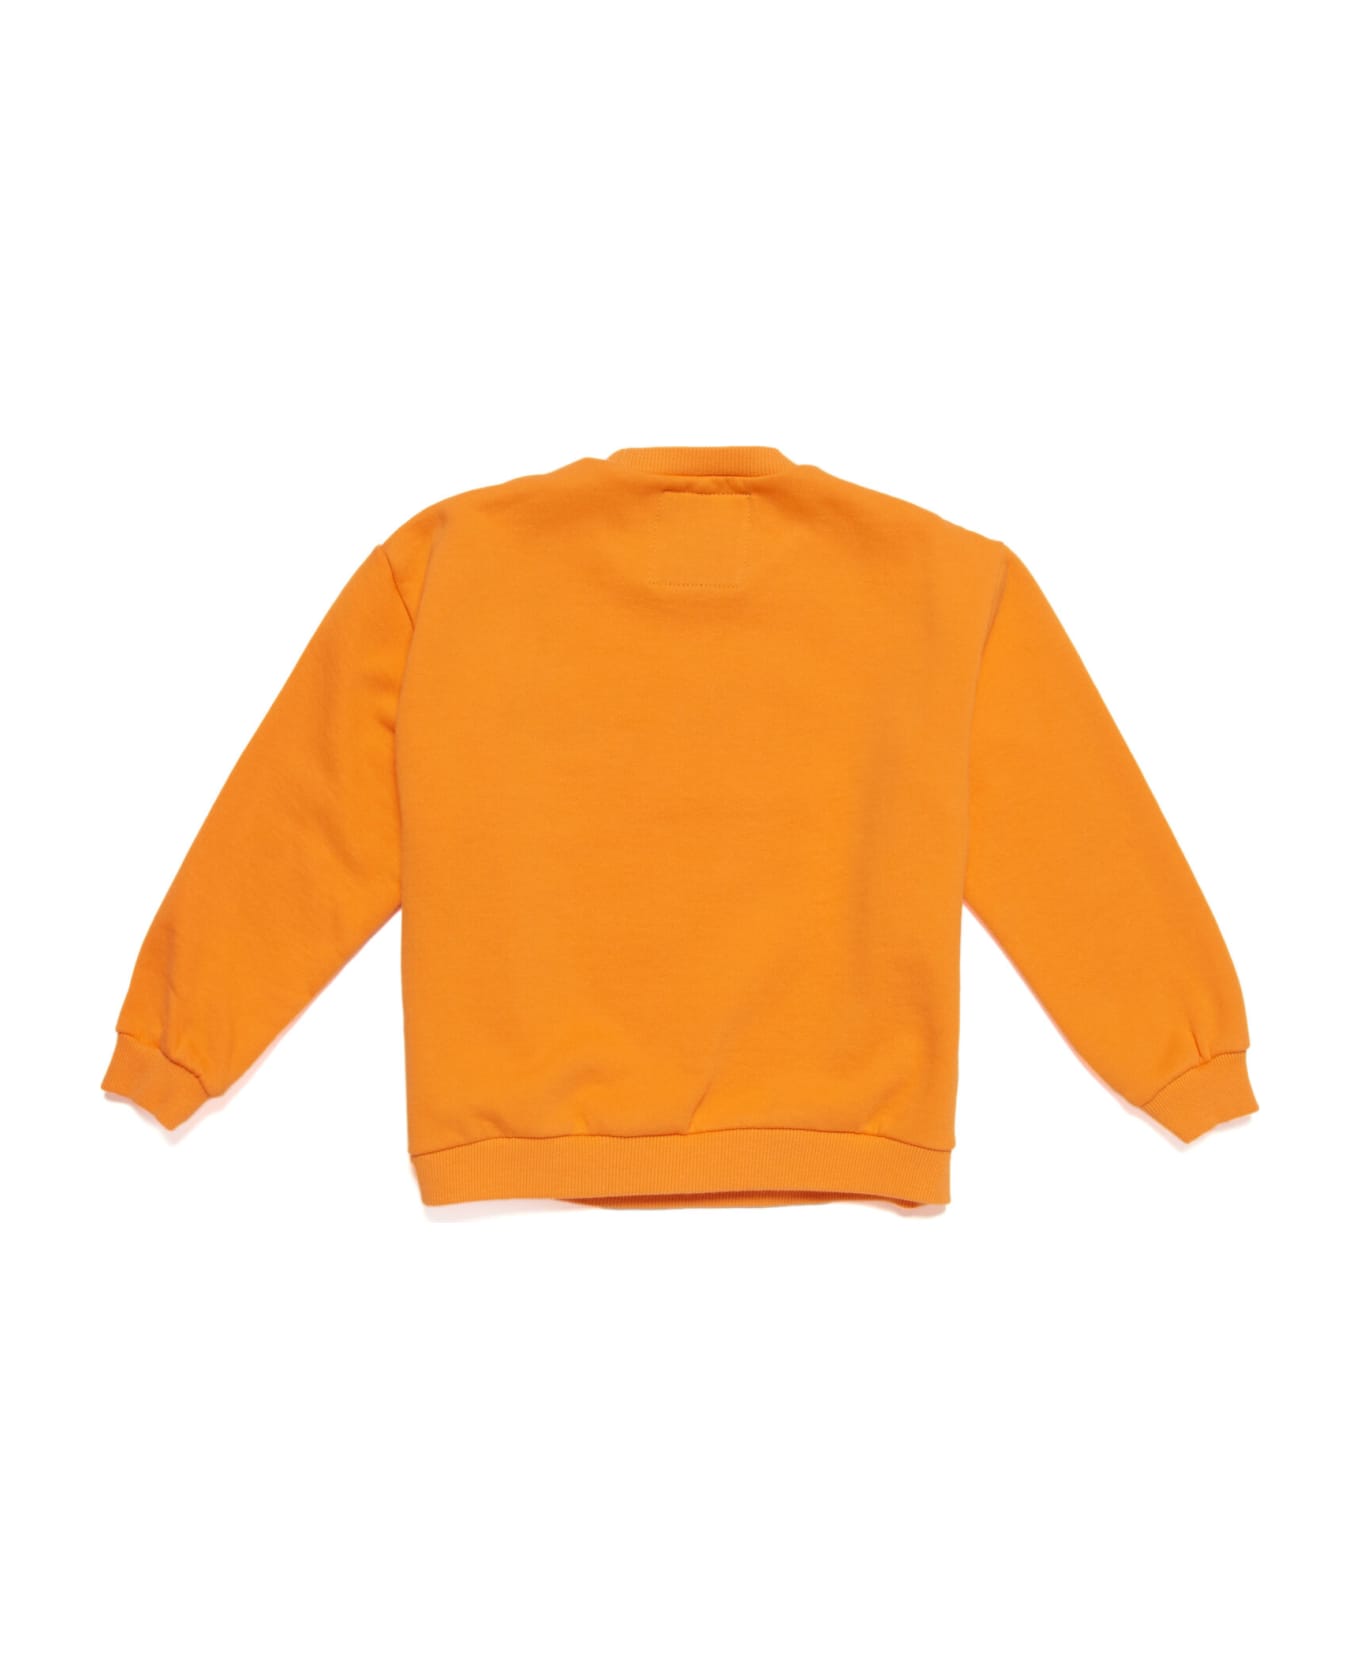 MYAR Mys2u Sweat-shirt Myar Crew-neck Sweatshirt In Deadstock Orange Fabric With Logo On The Front - Light orange